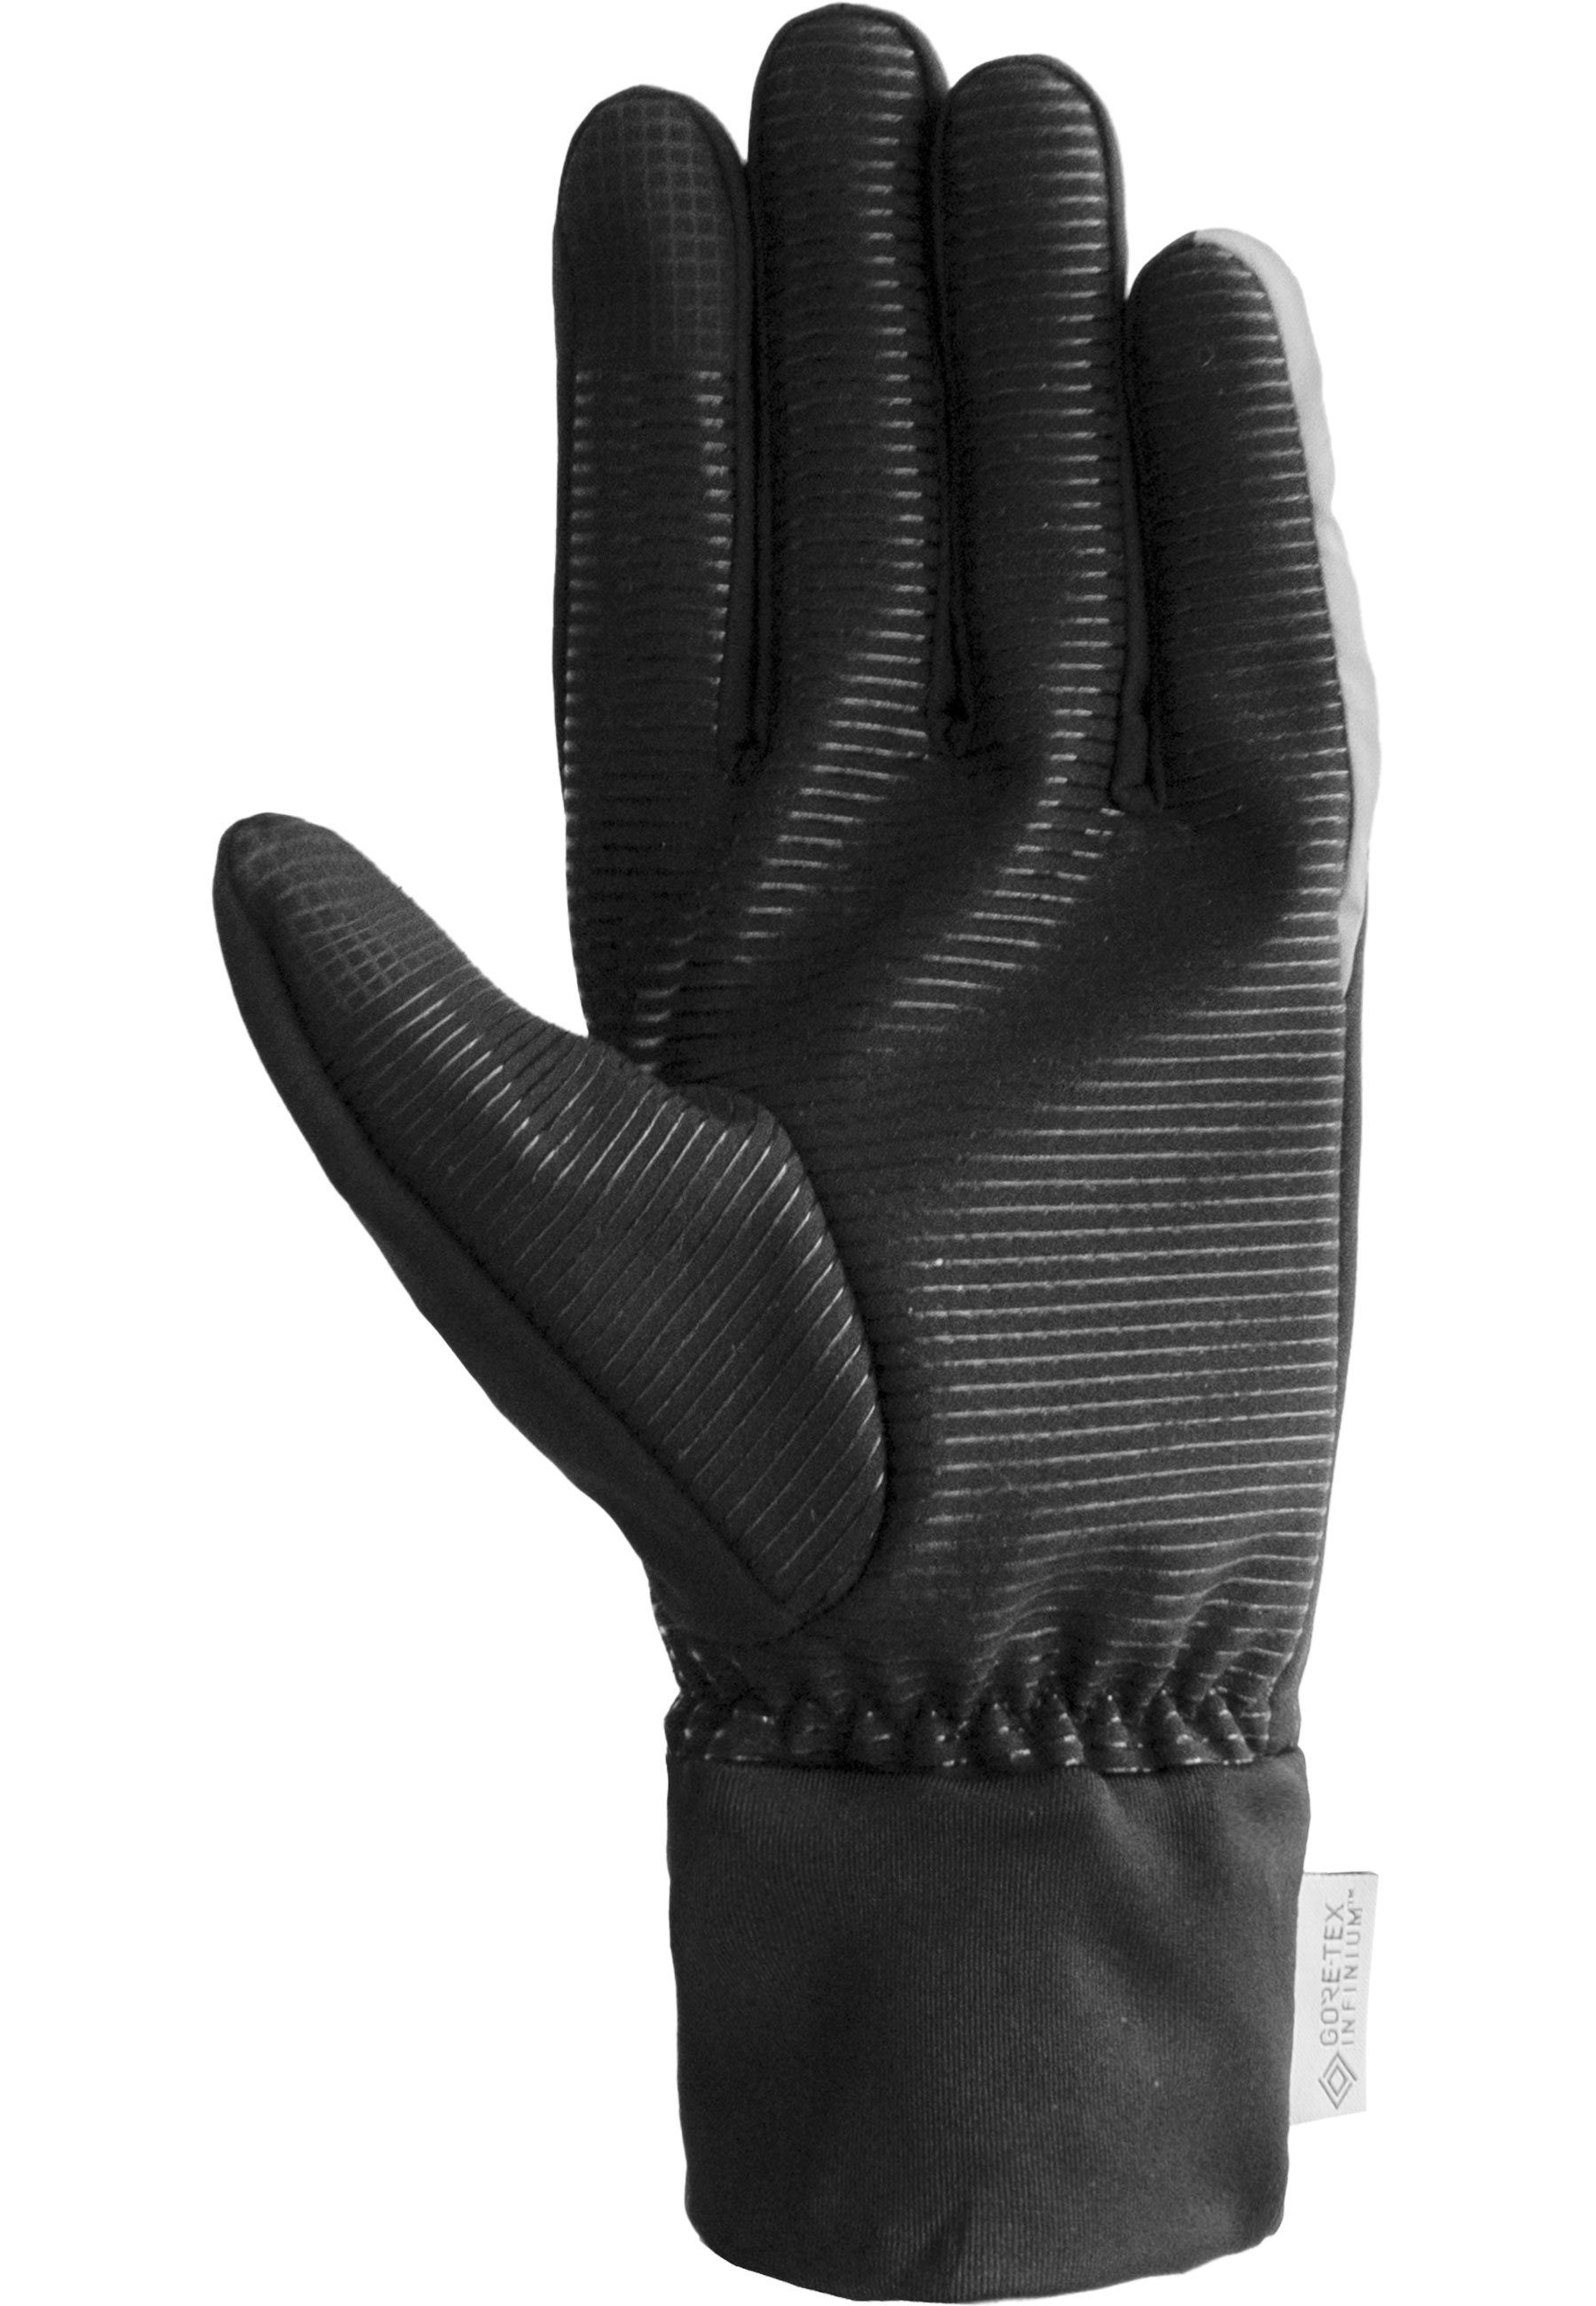 Reusch Laufhandschuhe Glove GORE-TEX Touchscreen-Funktion mit INFINIUM Multisport